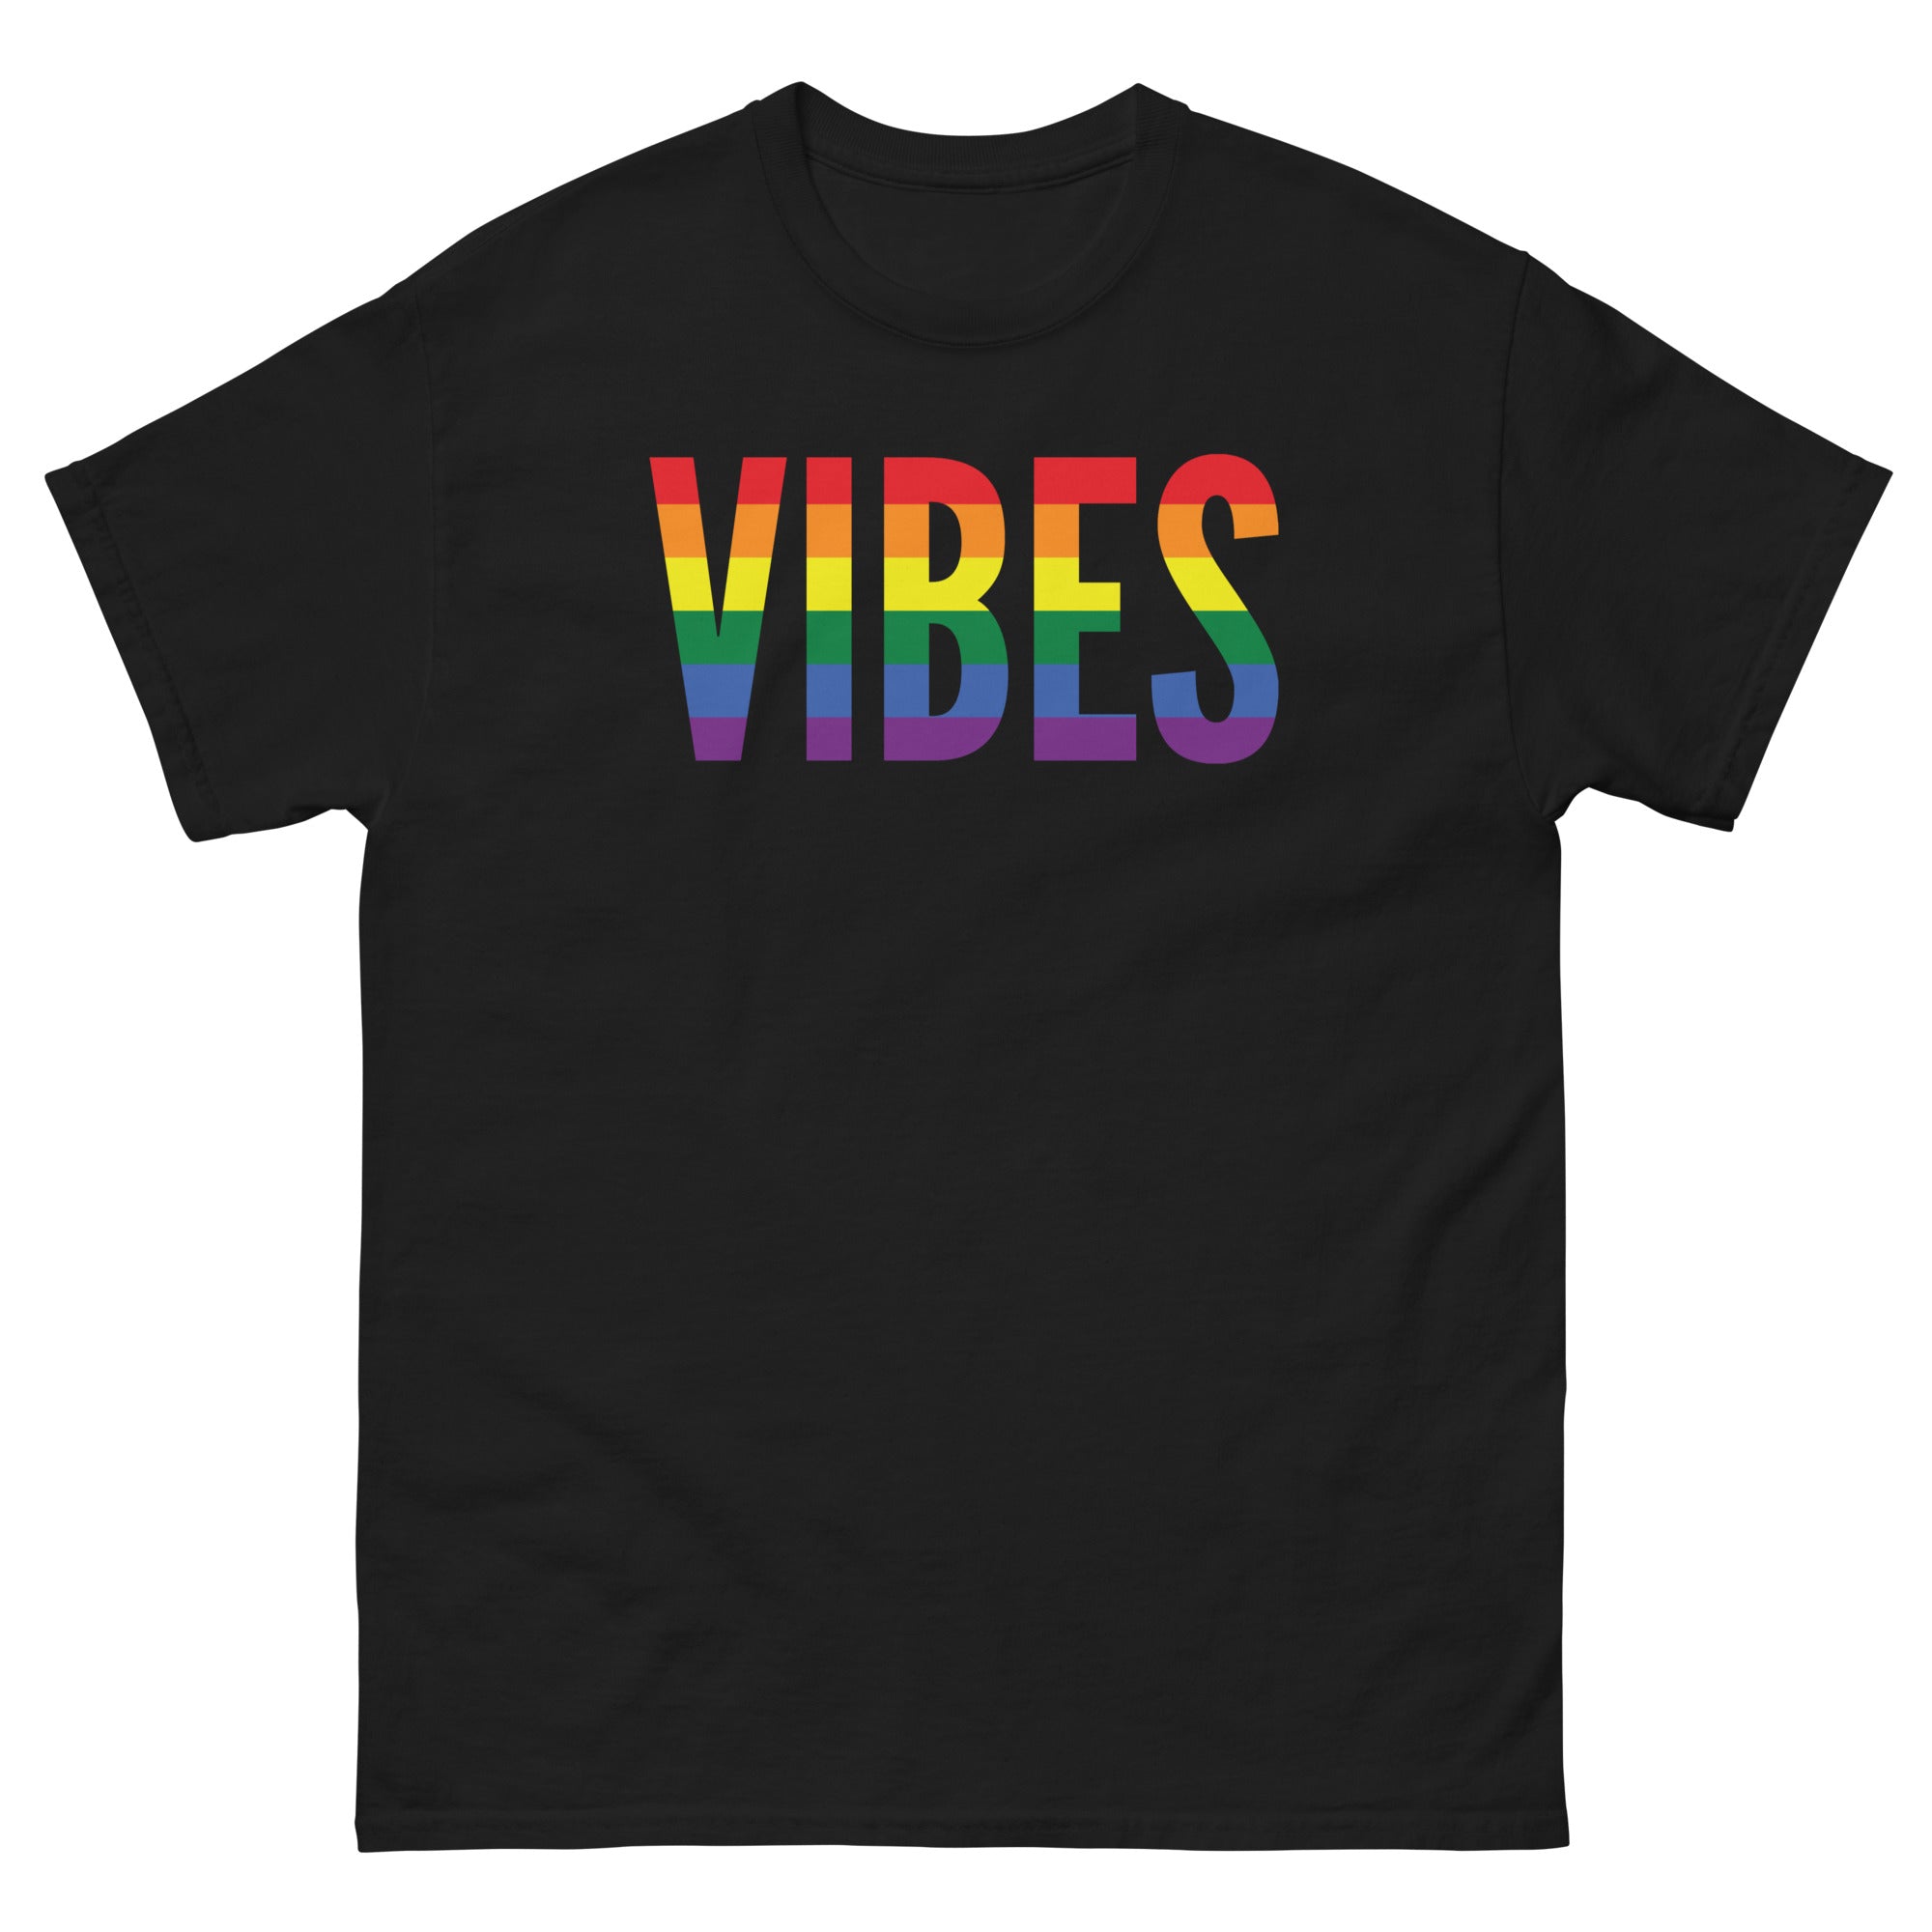 VIBES PRIDE - Men's T-Shirt